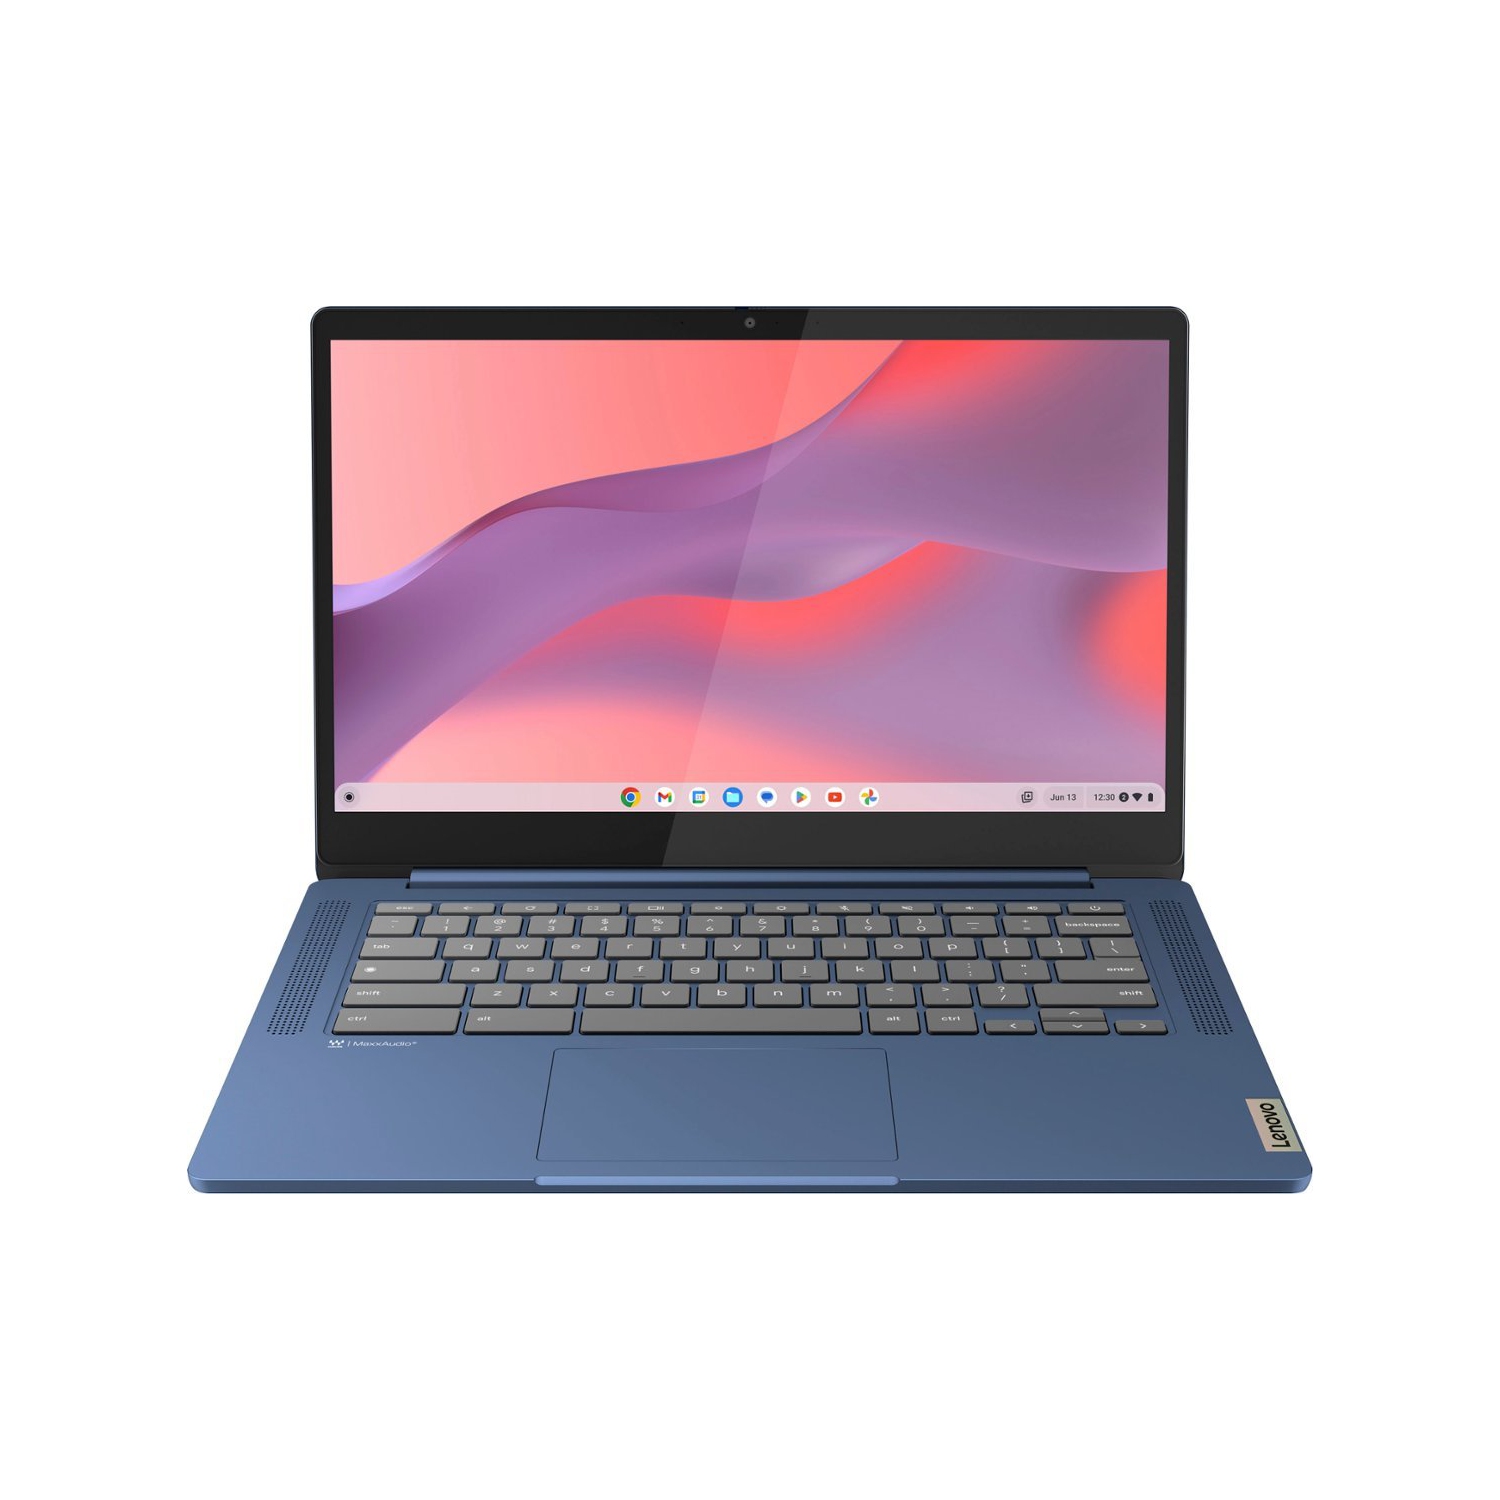 Lenovo Ideapad Slim 3 Chromebook 14" Touchscreen FHD Laptop (MediaTek 8186, 4GB RAM, 64GB eMMC, Chrome OS) - Abyss Blue (82XJ0000US)